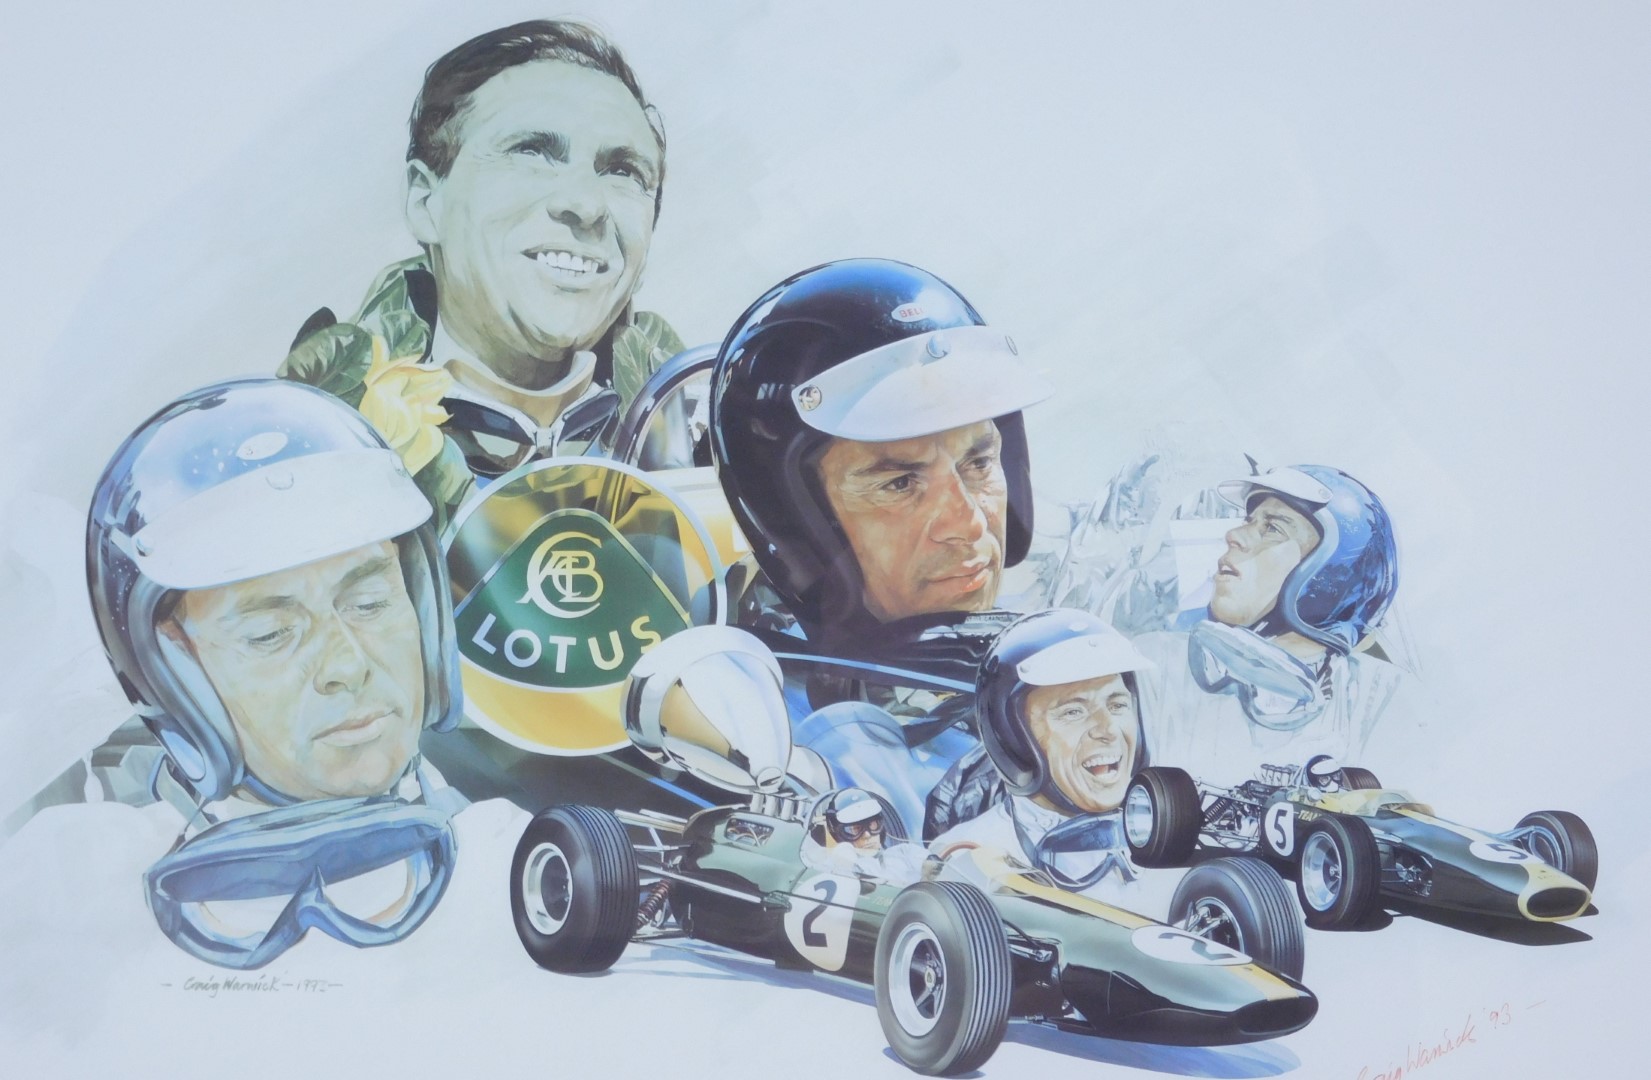 After Craig Warwick. Jim Clark 25th Anniversary motor racing print, 1968 - 1993, limited edition 357